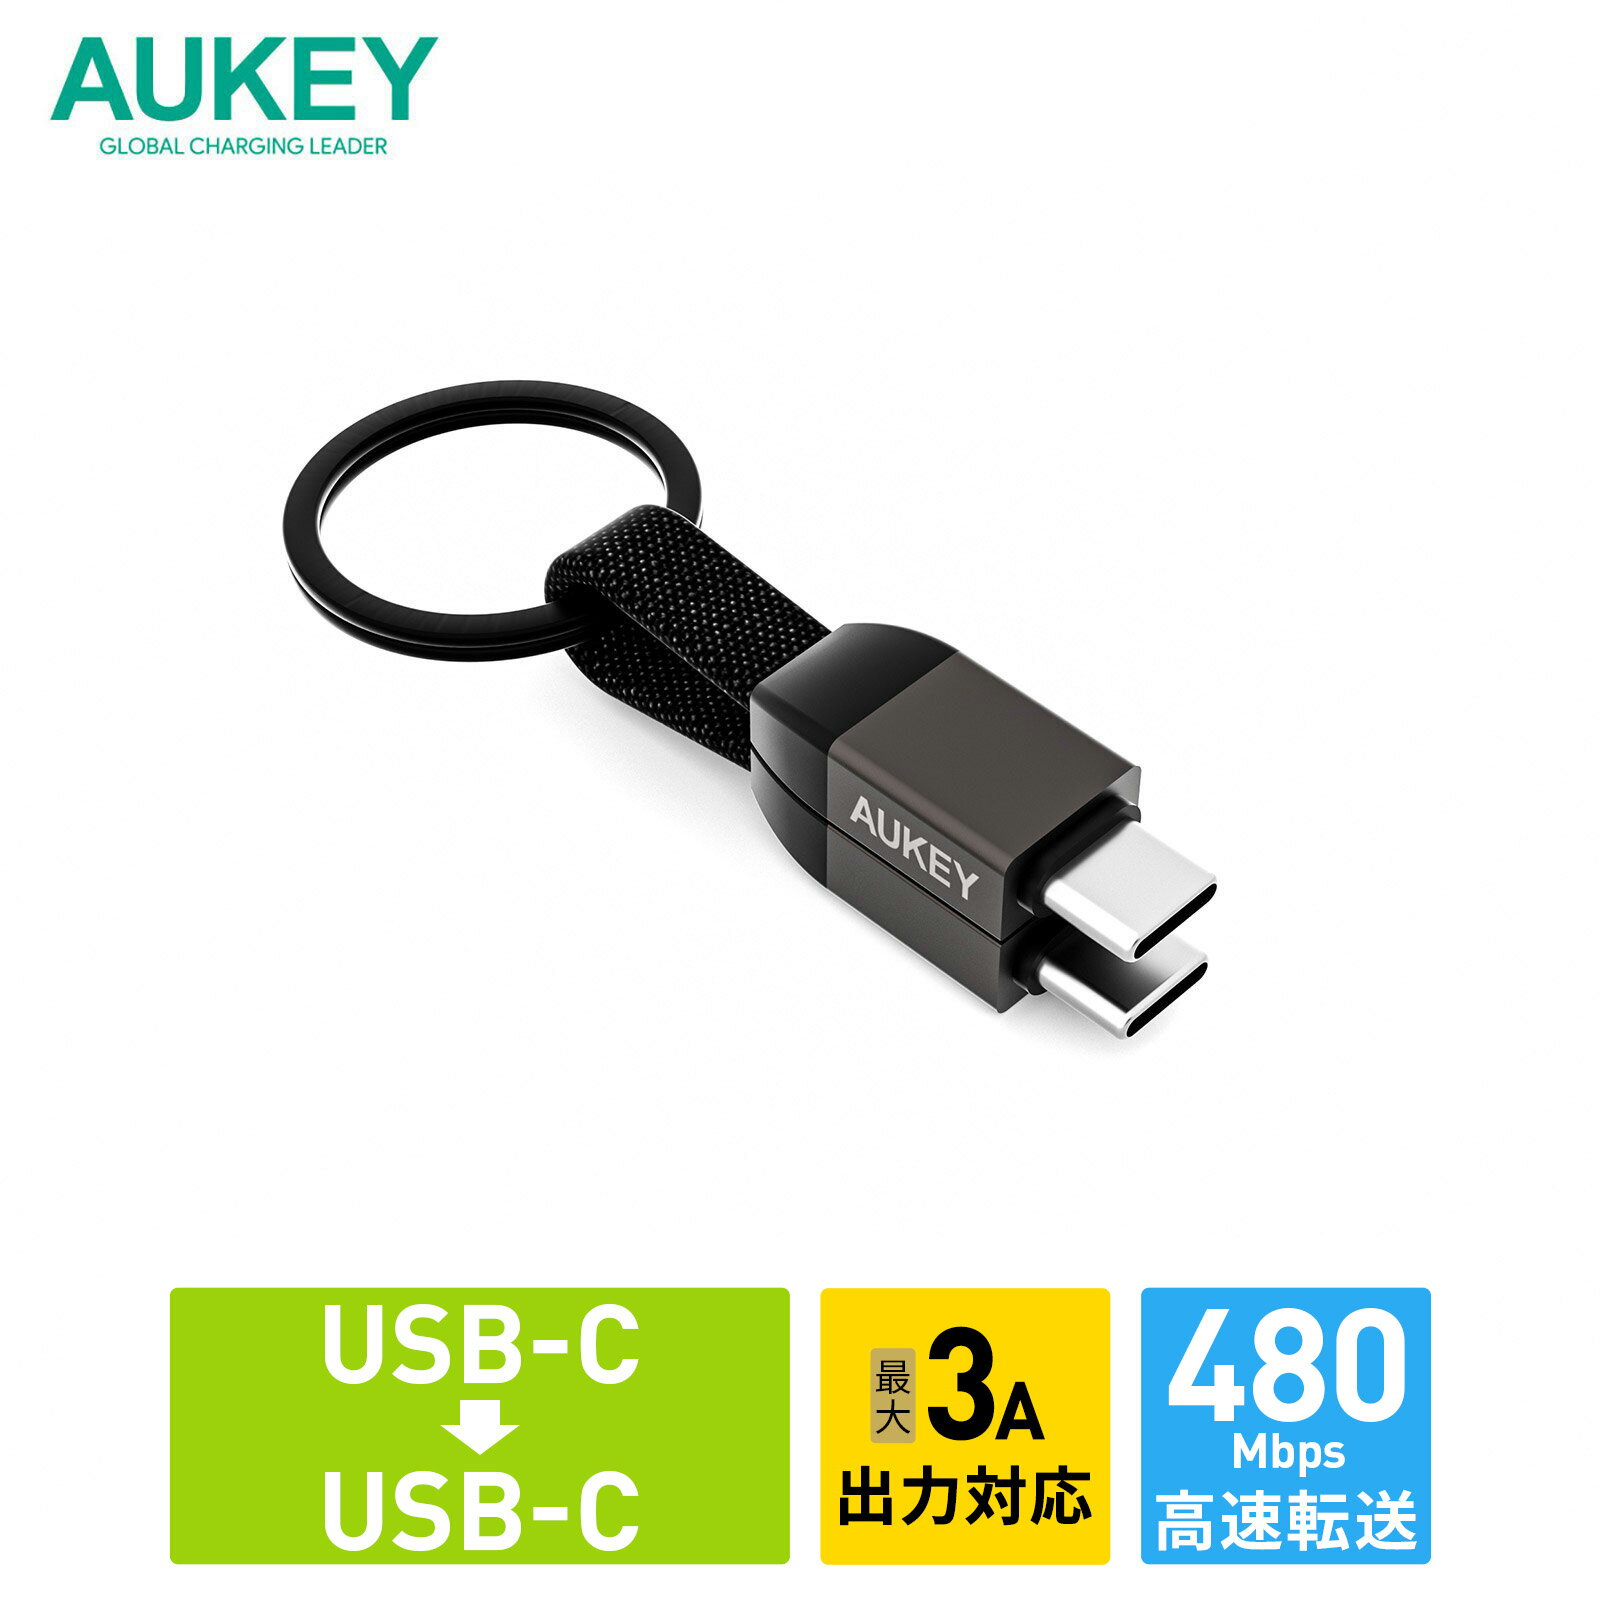 USB Type-C to C ケーブル C-C 10cm AUKEY オーキー Circlet Series CB-CC16 ブラック 急速充電 キーホルダー型 キーリング iPhone データ転送 480Mbps 2年保証